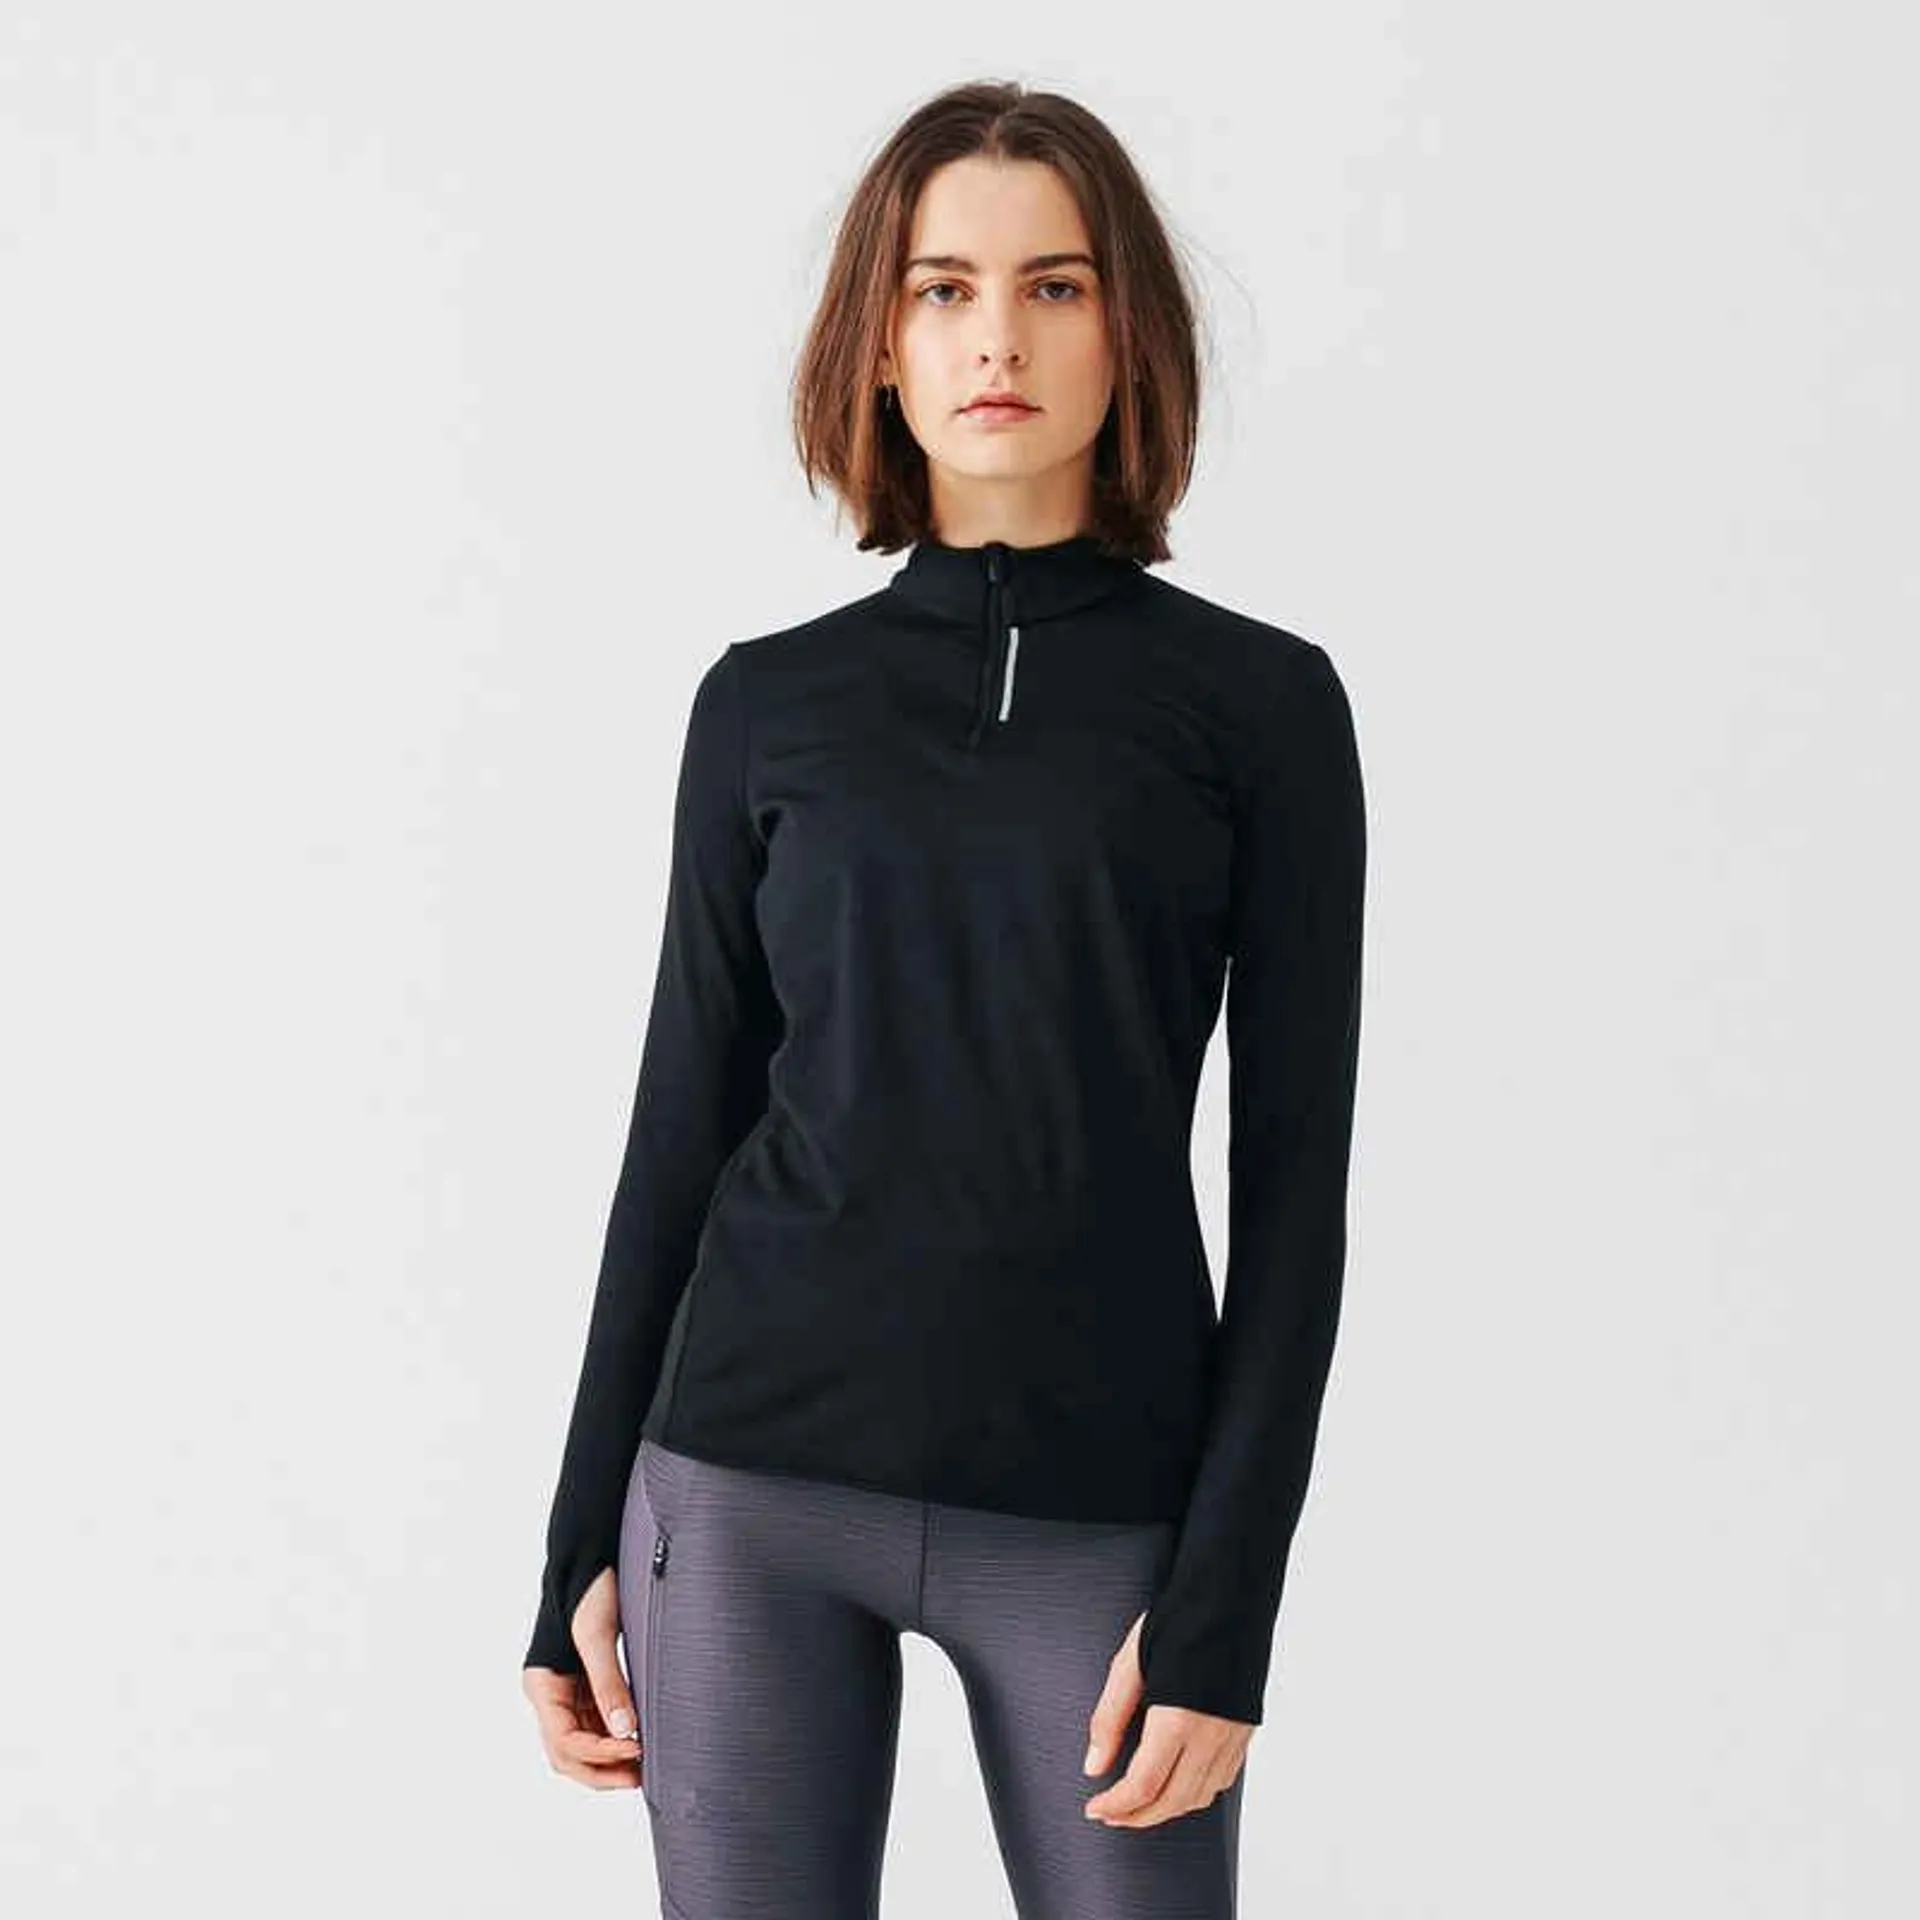 Camiseta manga larga cálida Mujer Running - Zip warm negro